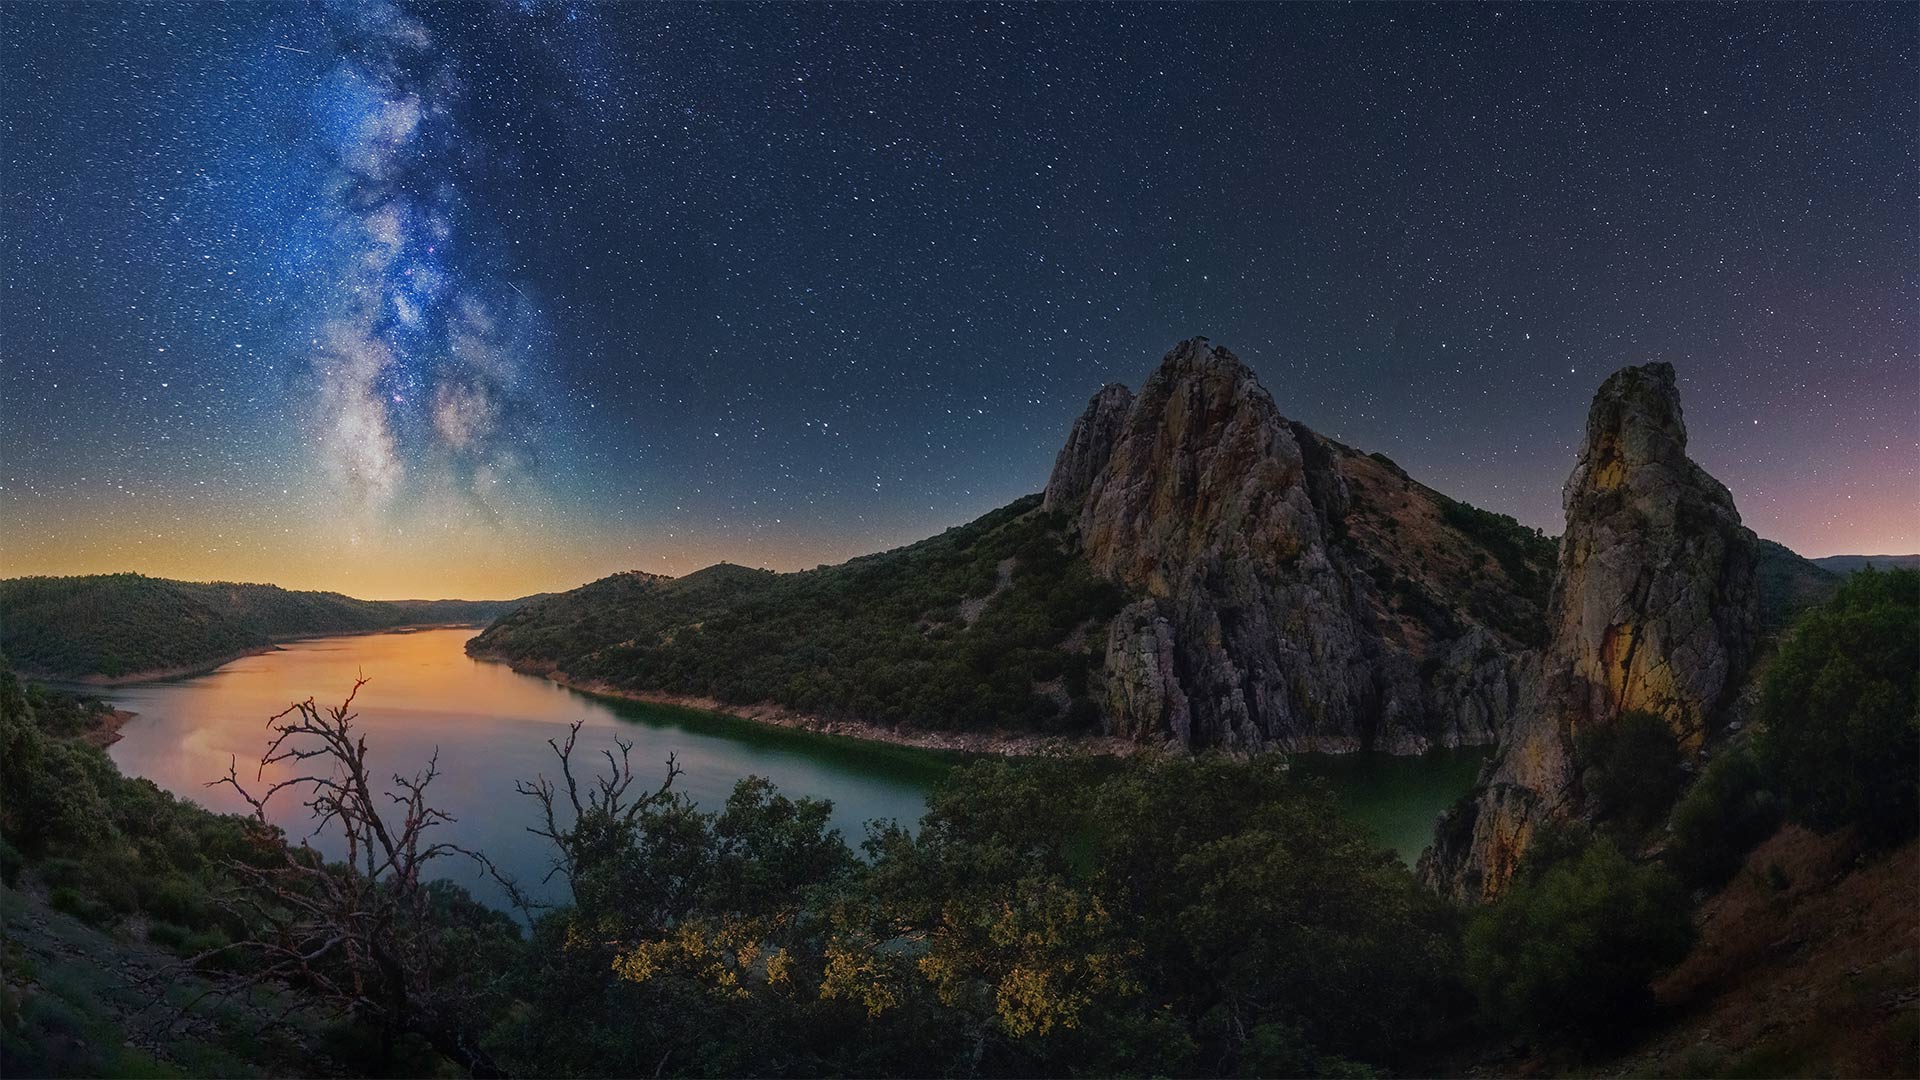 Milky Way over the Tagus River in Monfragüe National Park, Spain - Miguel Angel Muñoz Ruiz/Cavan Images)